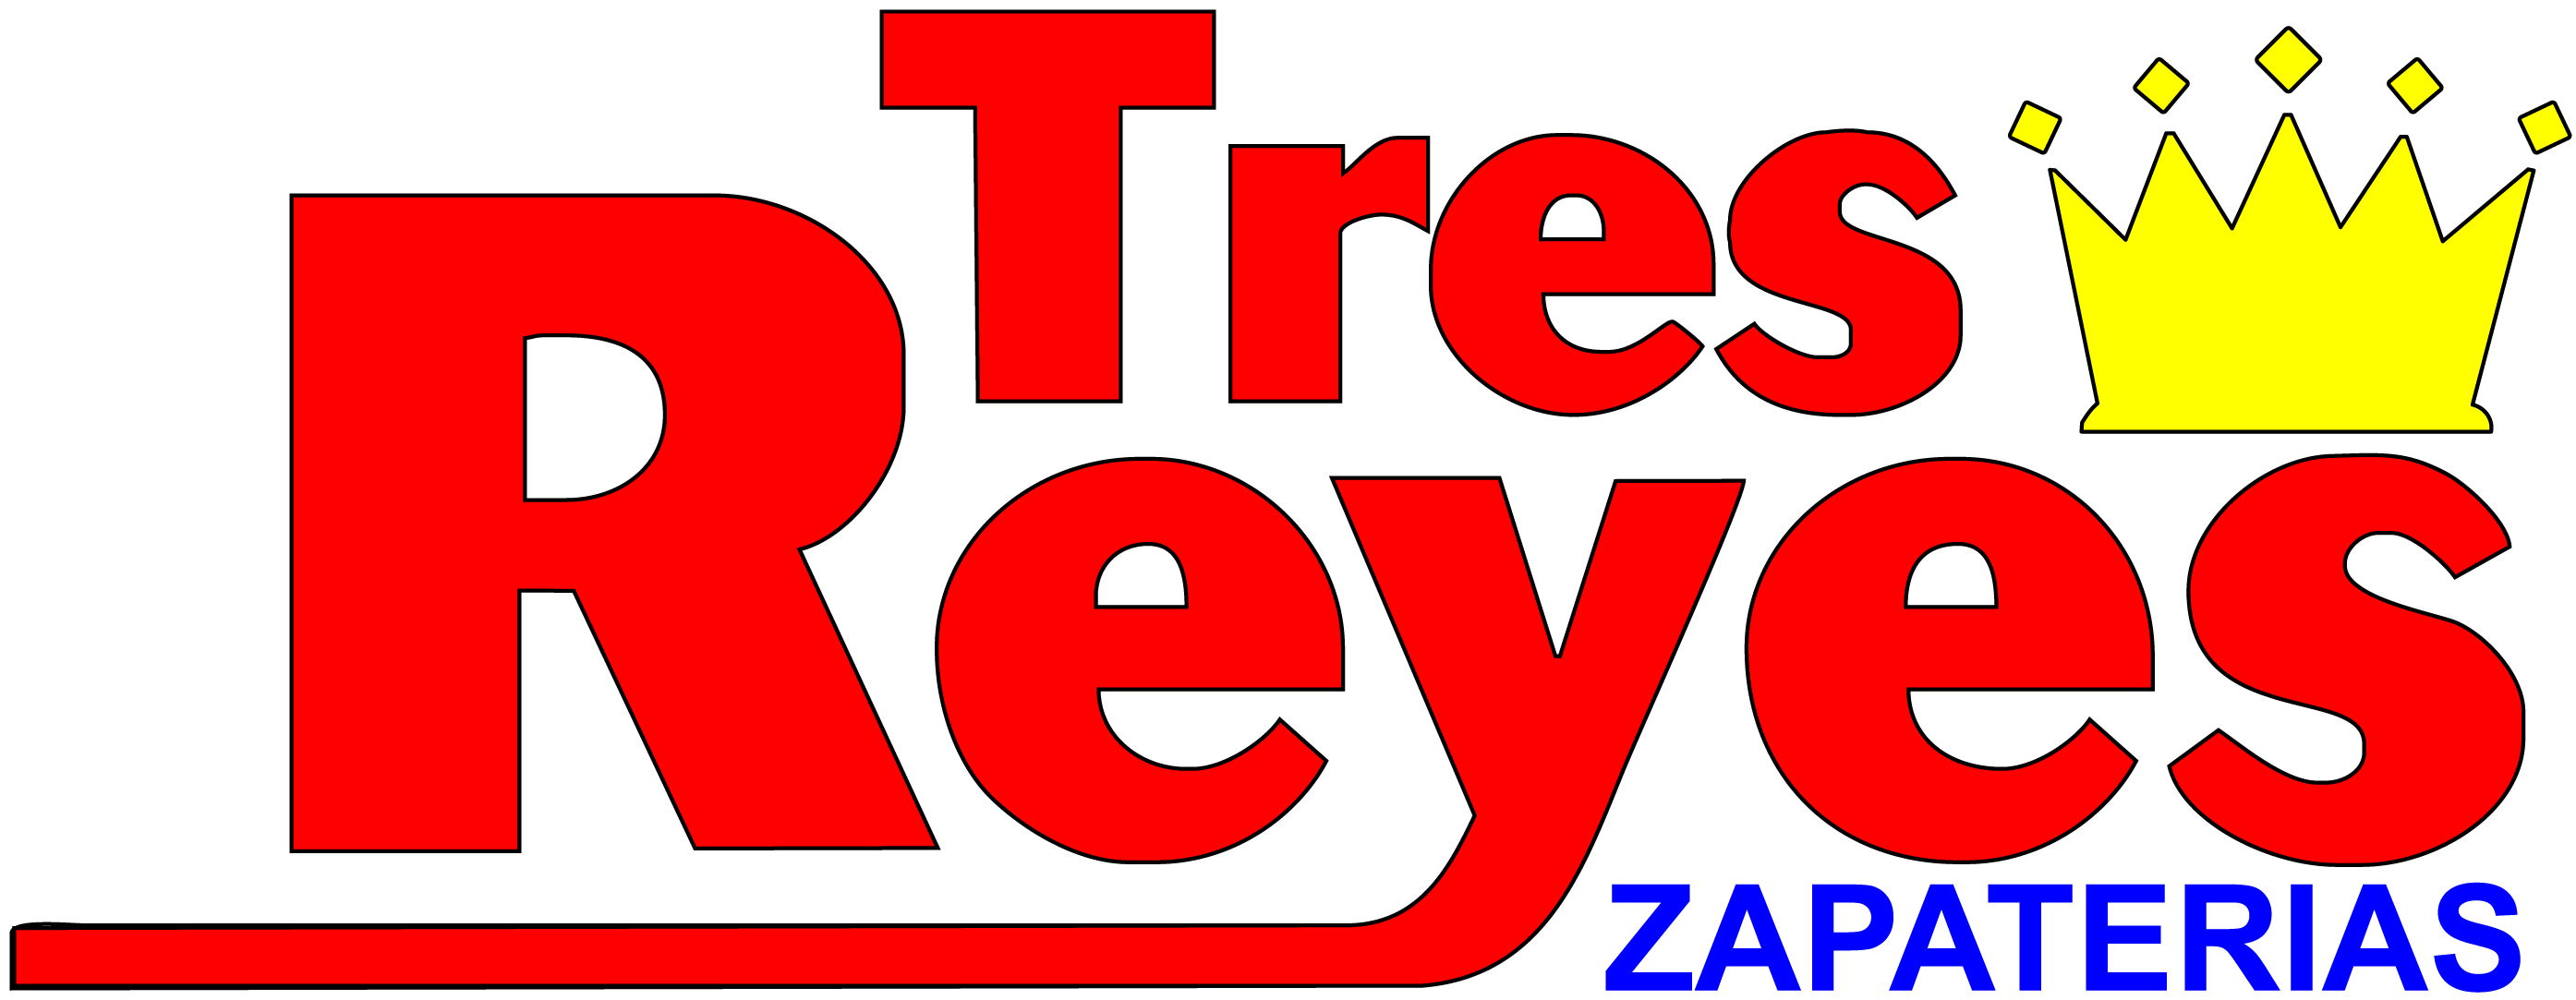 Logotipo Tres Reyes